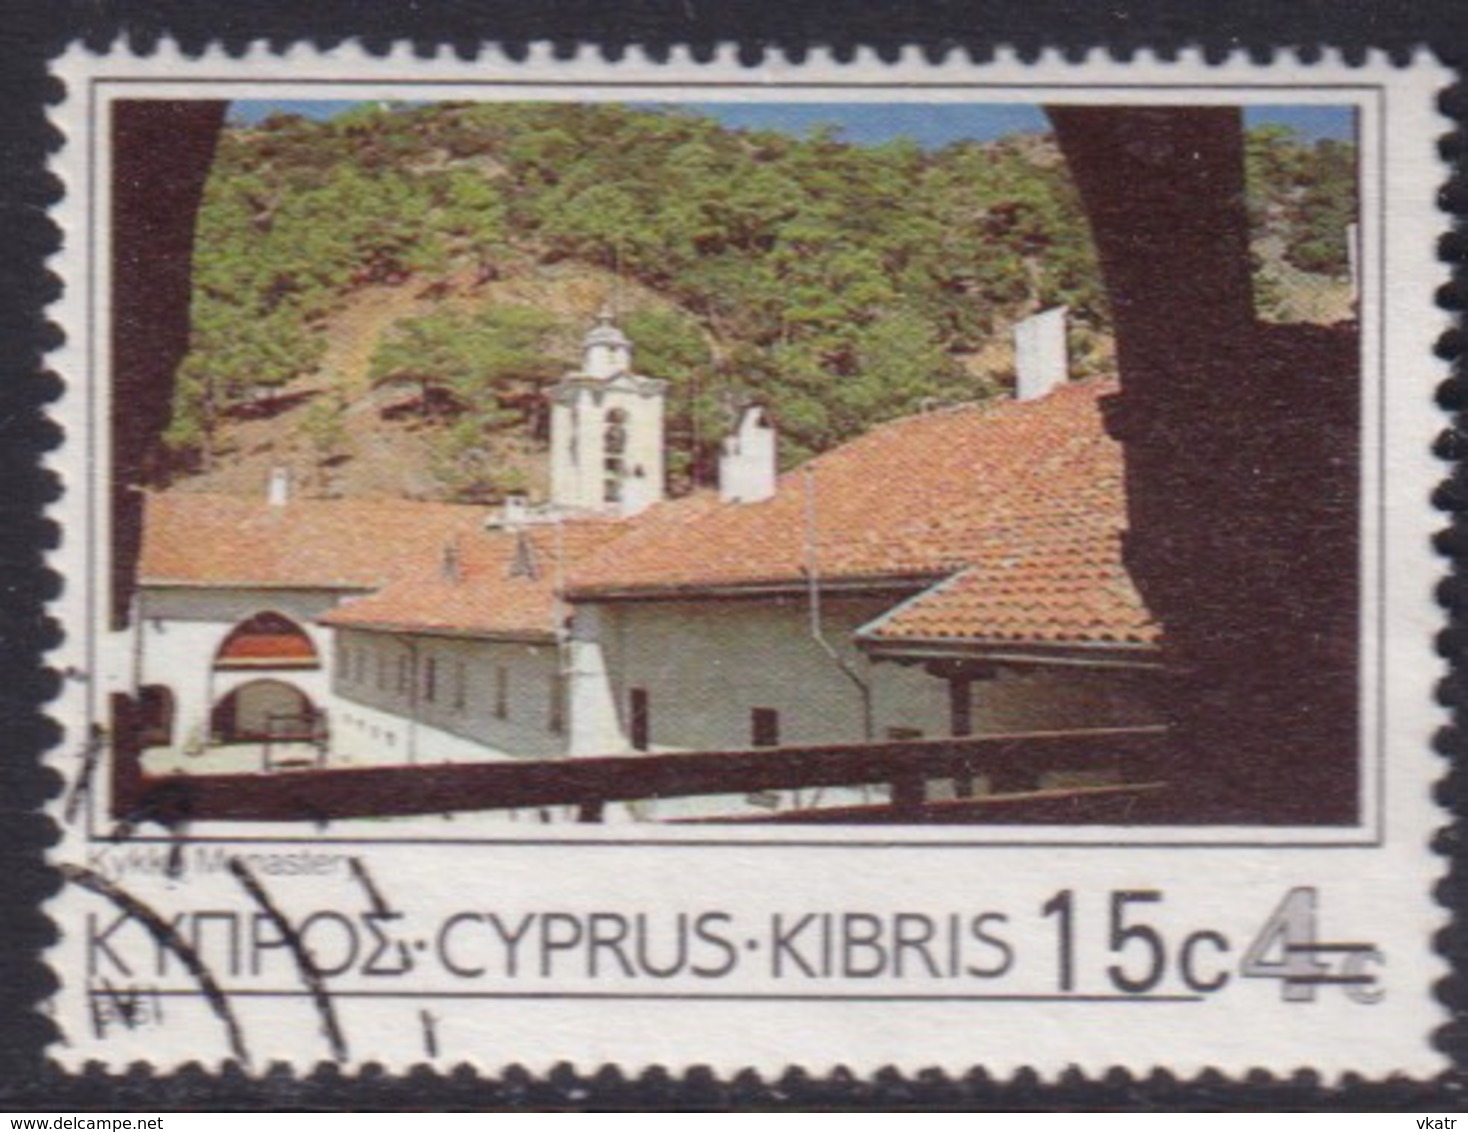 Cyprus 1988 SG #730 15c On 4c Used Kykko Monastery - Used Stamps